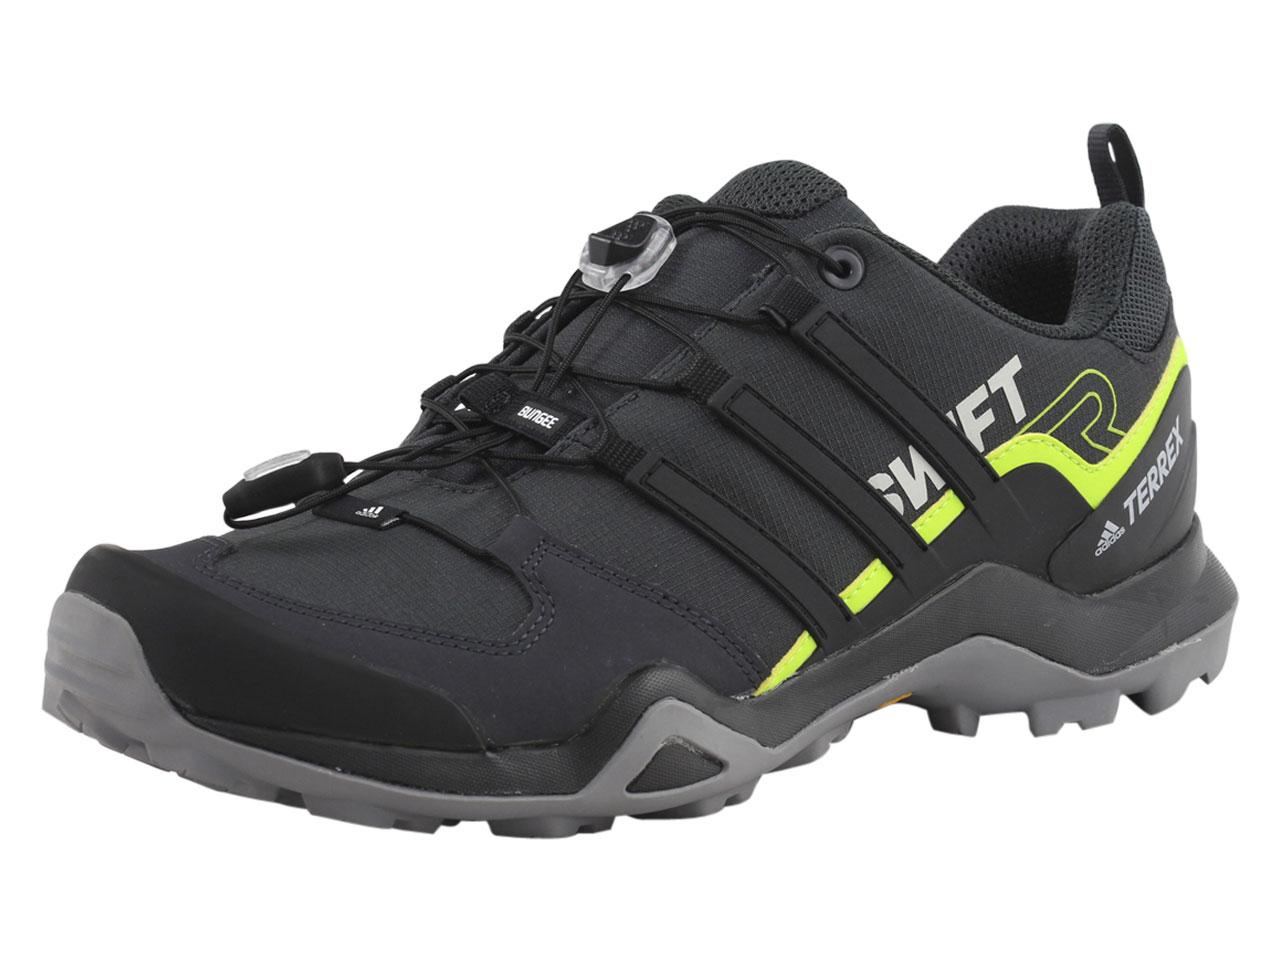 Adidas Men's Terrex Swift R2 Hiking Sneakers Shoes - Carbon/Black/Grey Three - 10 D(M) US